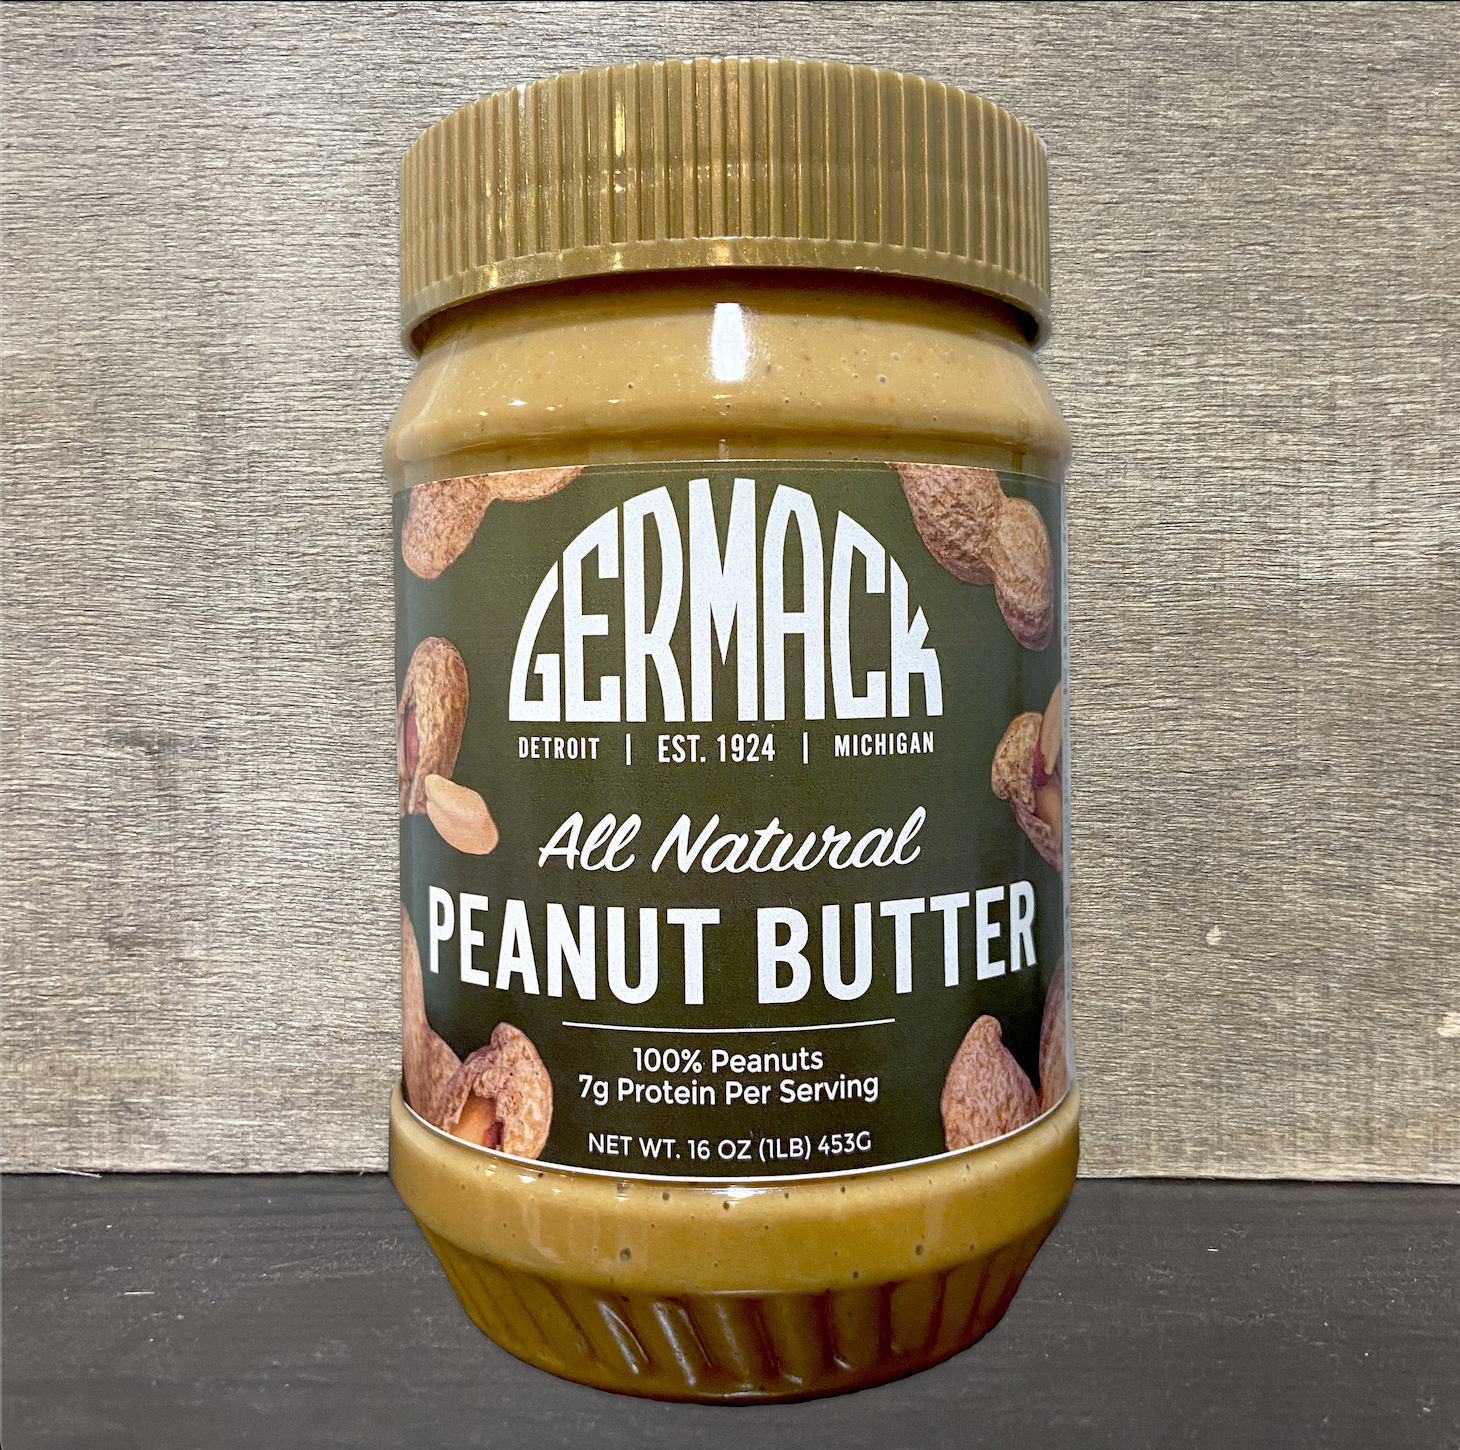 Picture Nut Butters - Peanut Butter - Natural (16 oz. jar)